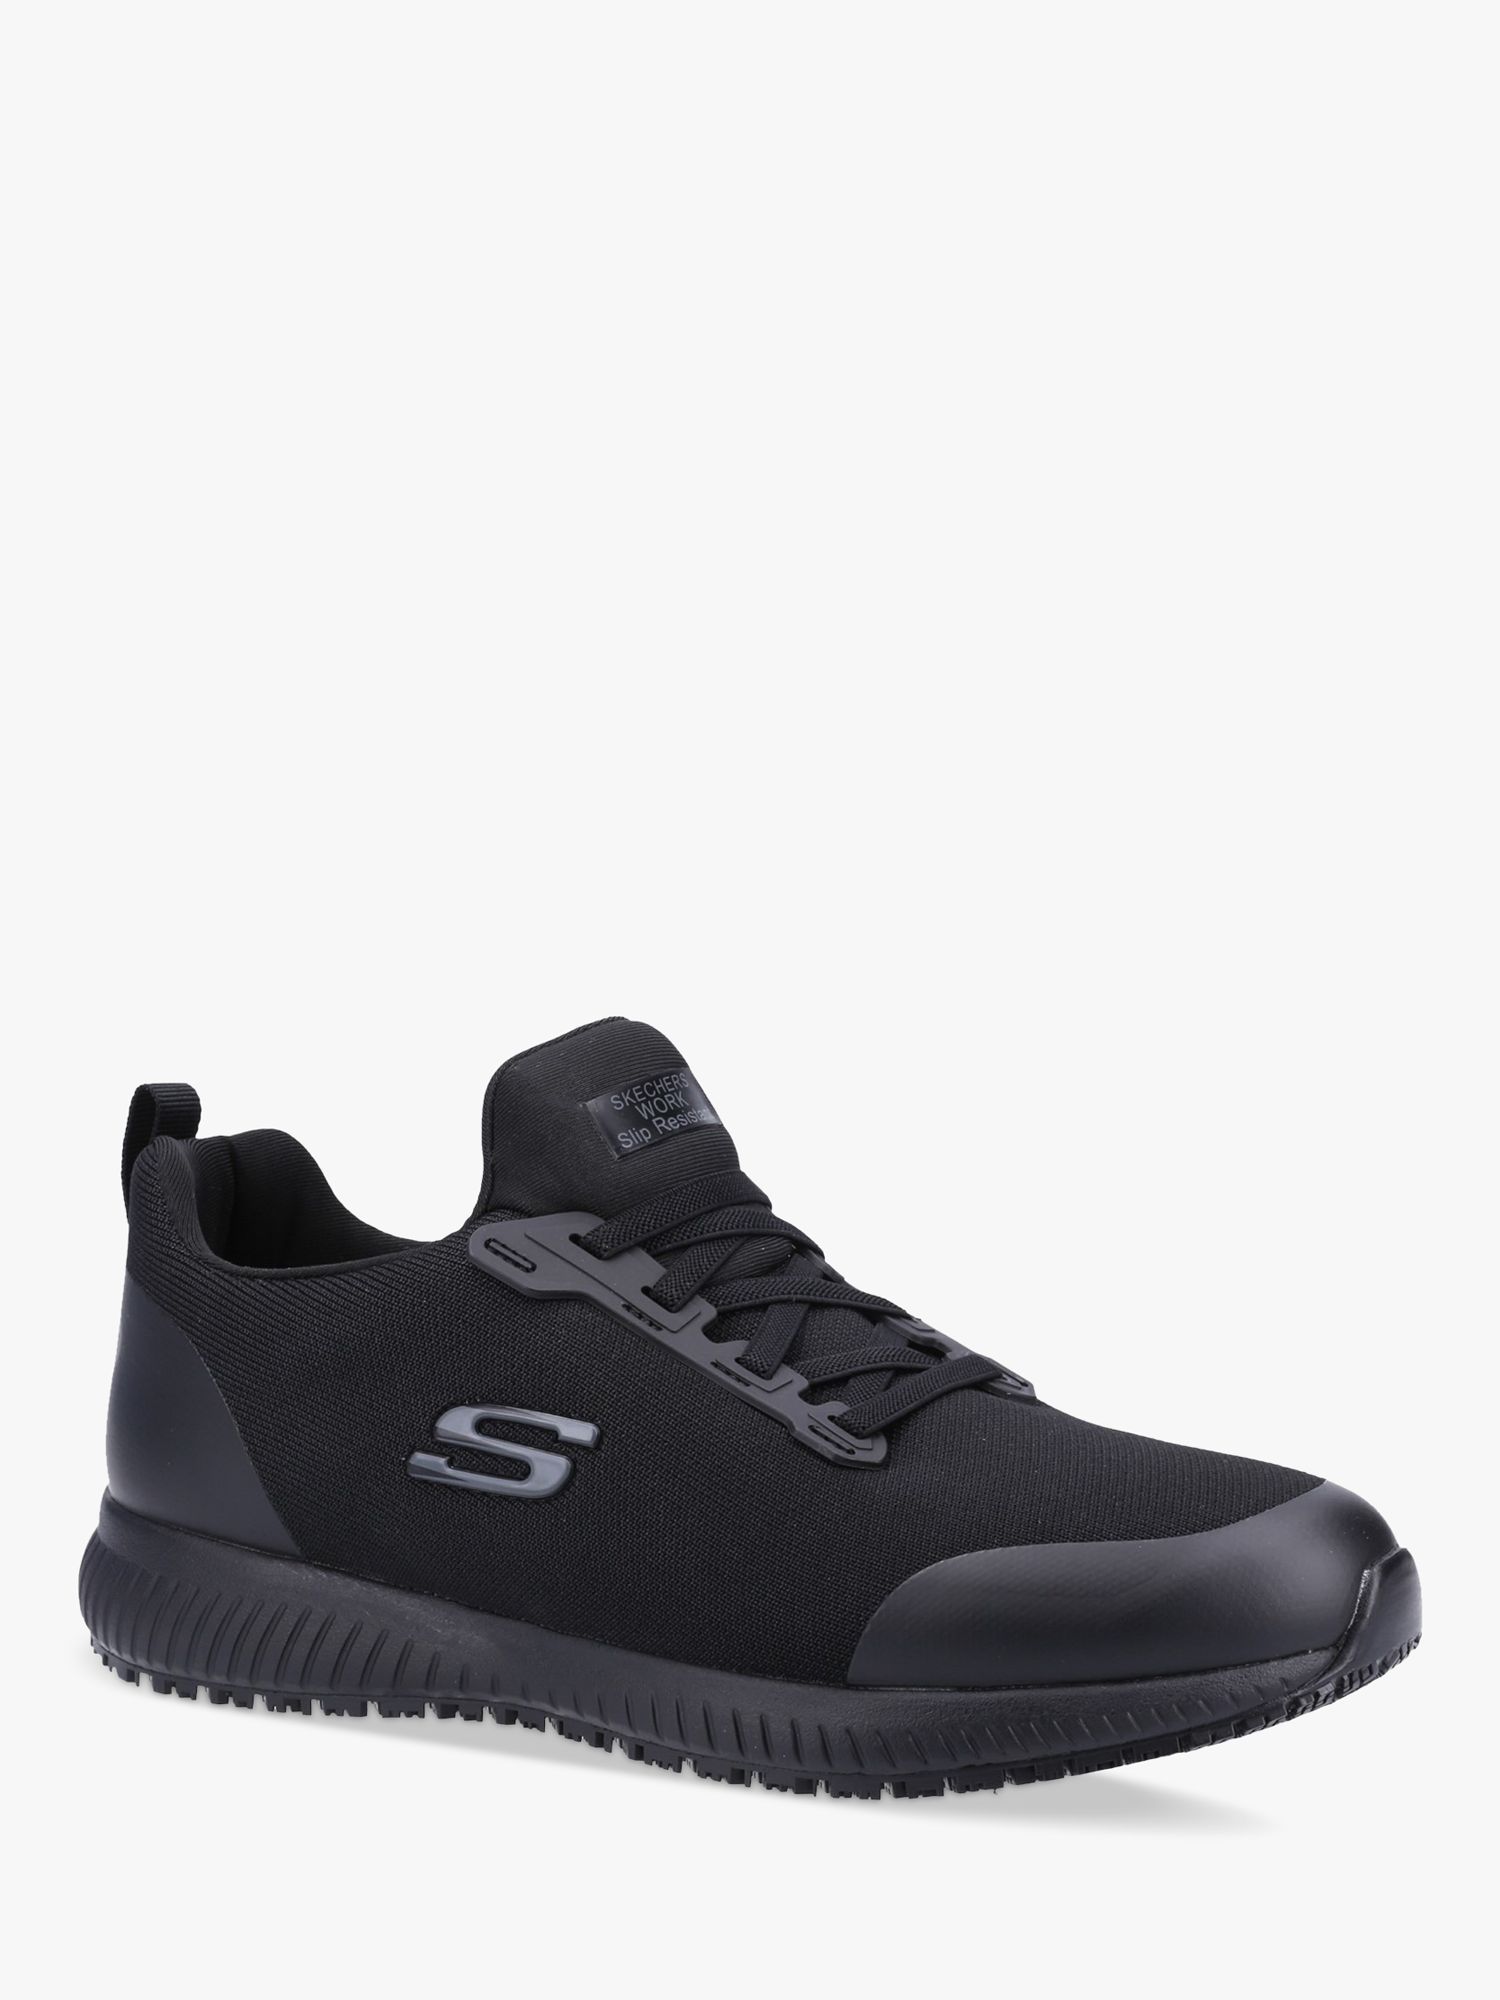 Skechers Squad SR Myton Occupational Shoes, Black at John Lewis & Partners